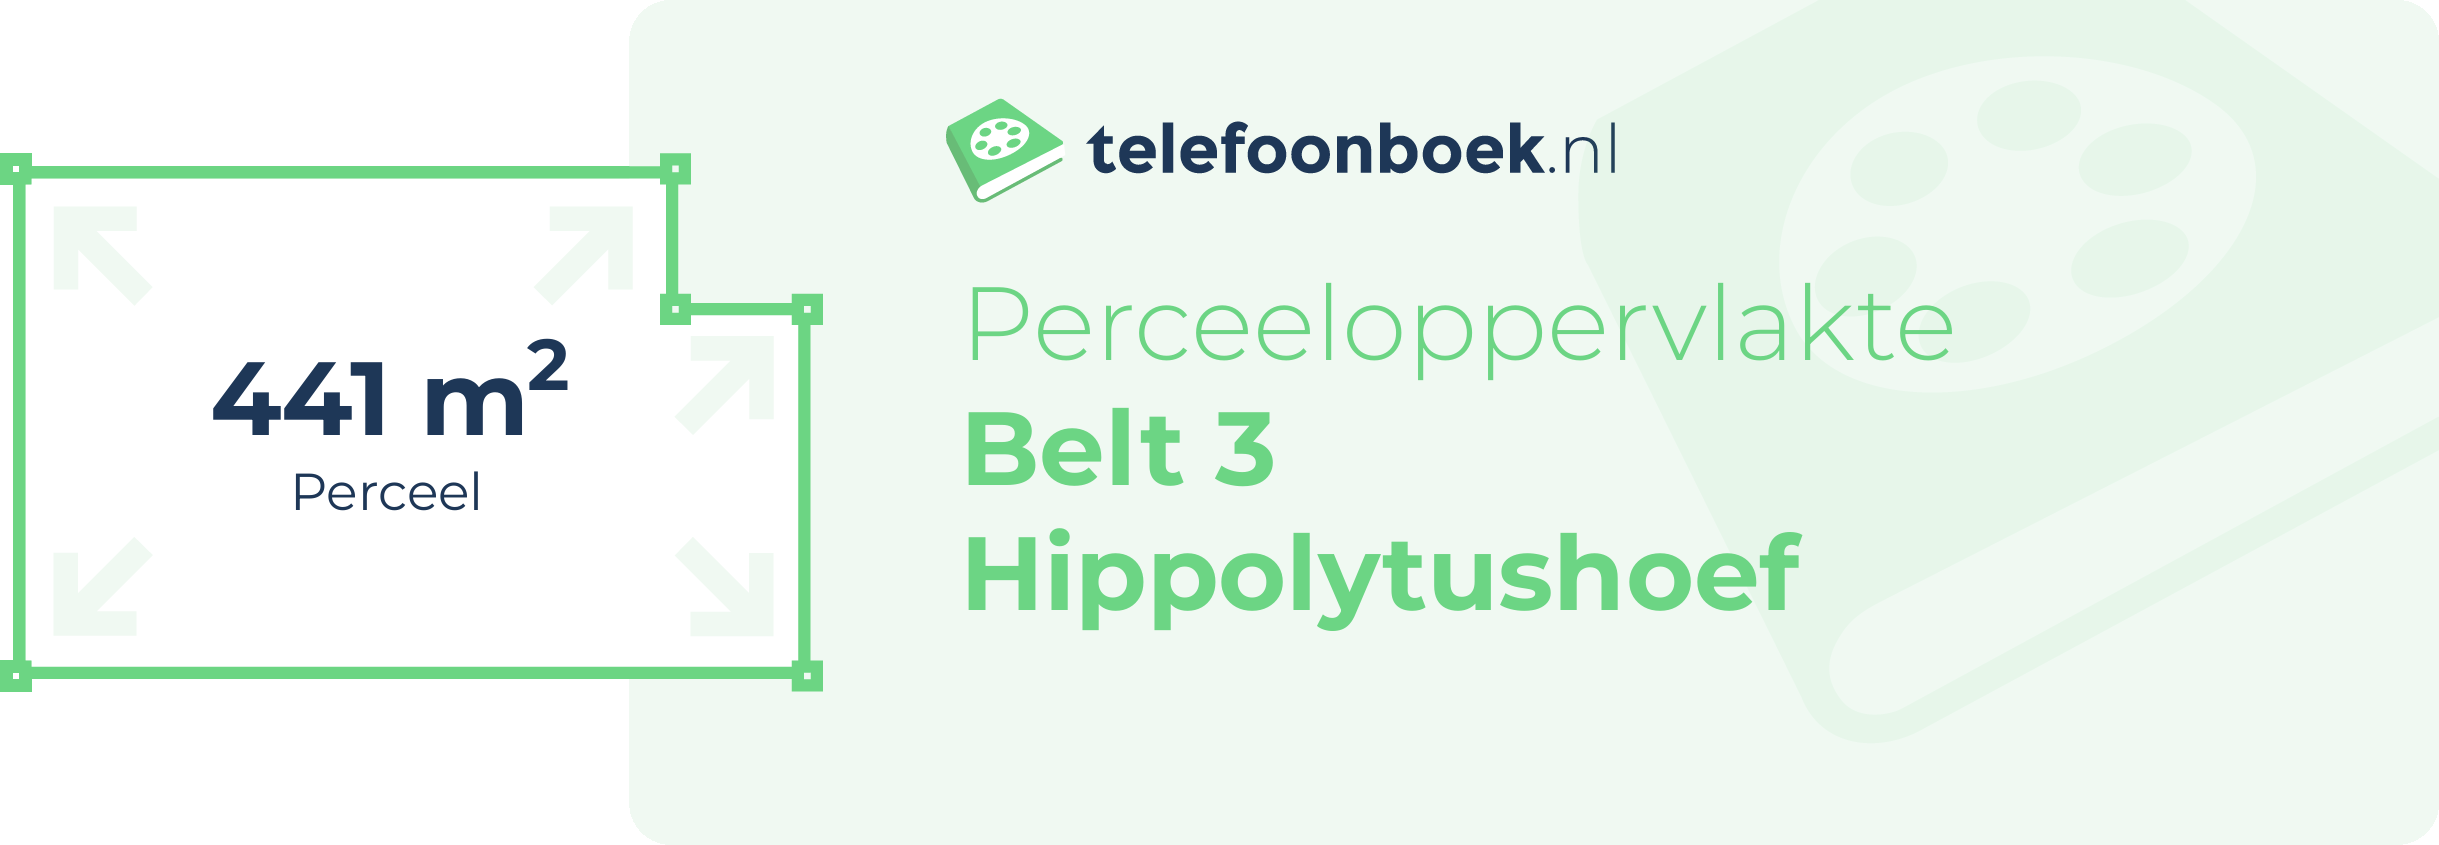 Perceeloppervlakte Belt 3 Hippolytushoef